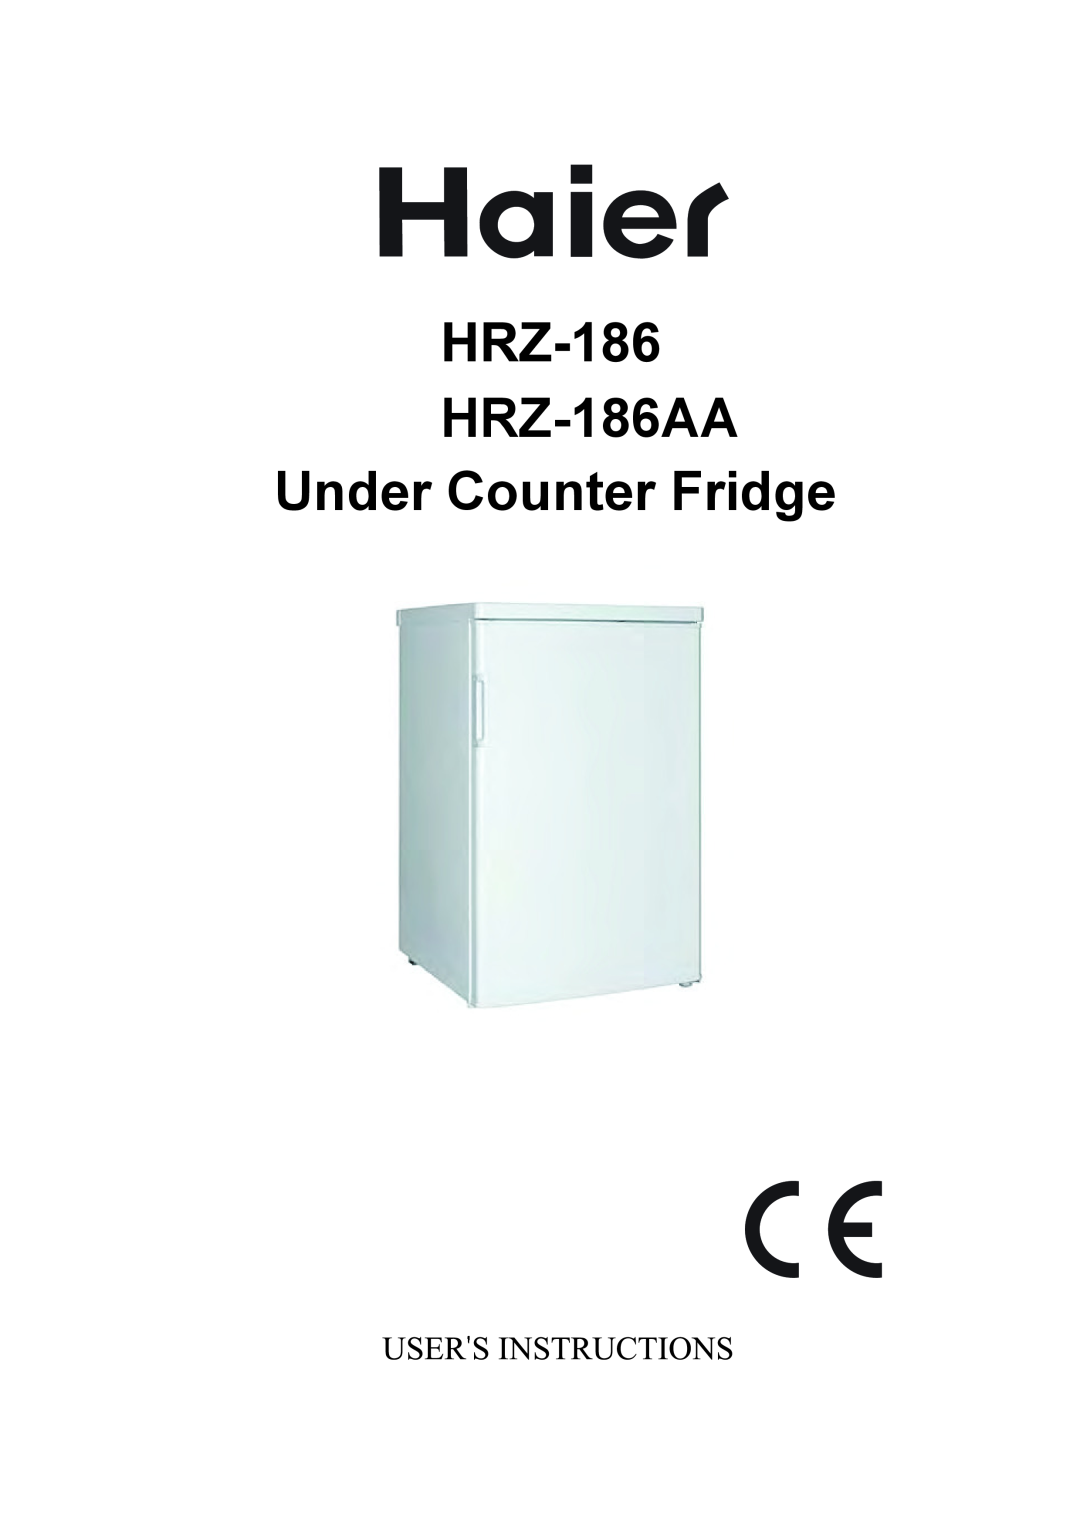 Haier manual HRZ-186AA Under Counter Fridge 